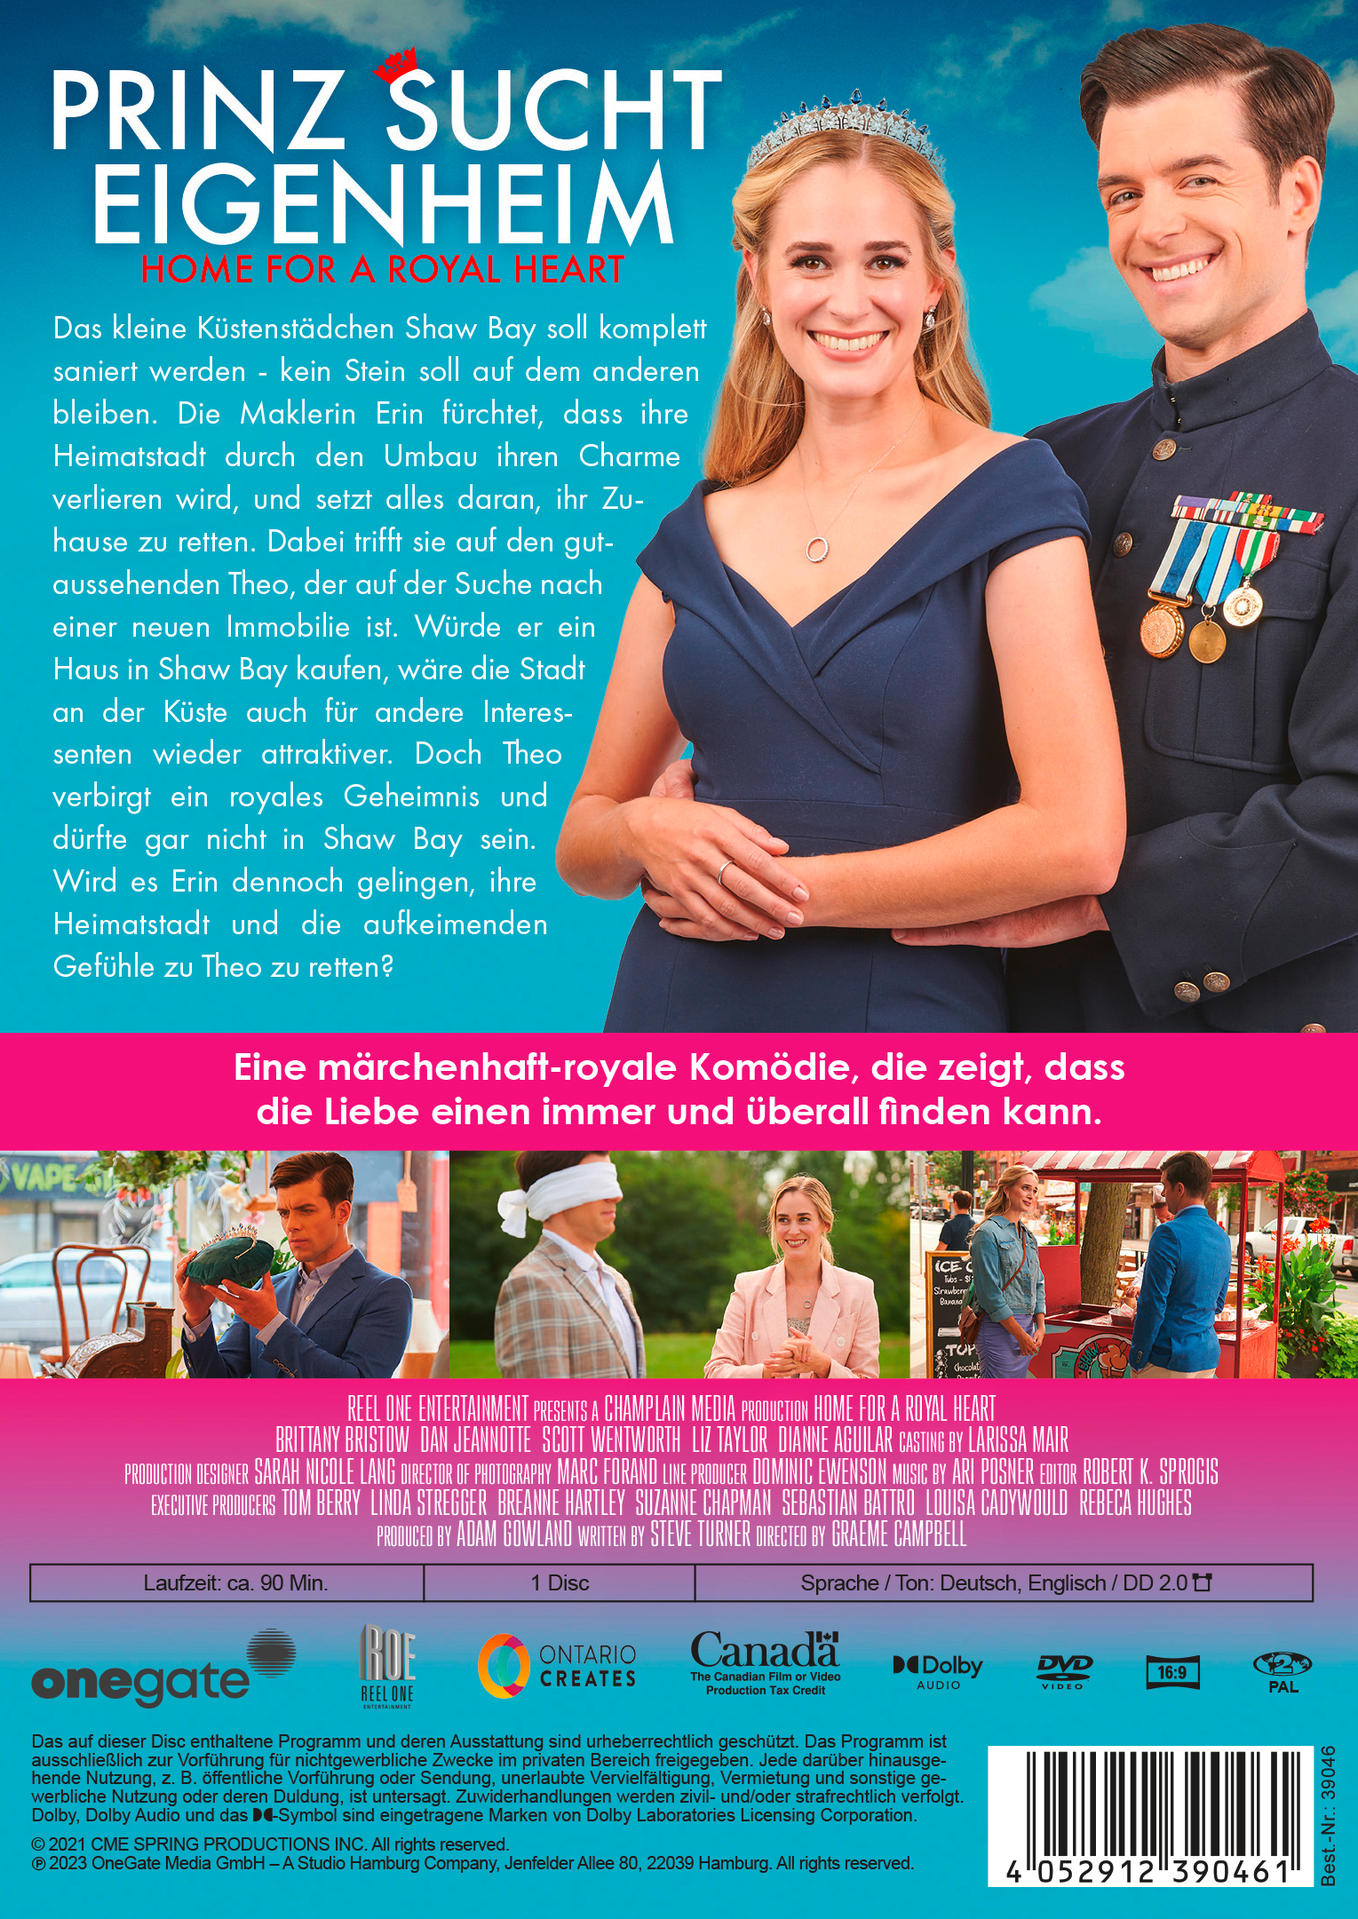 Prinz sucht Eigenheim - a Home Royal DVD for Heart